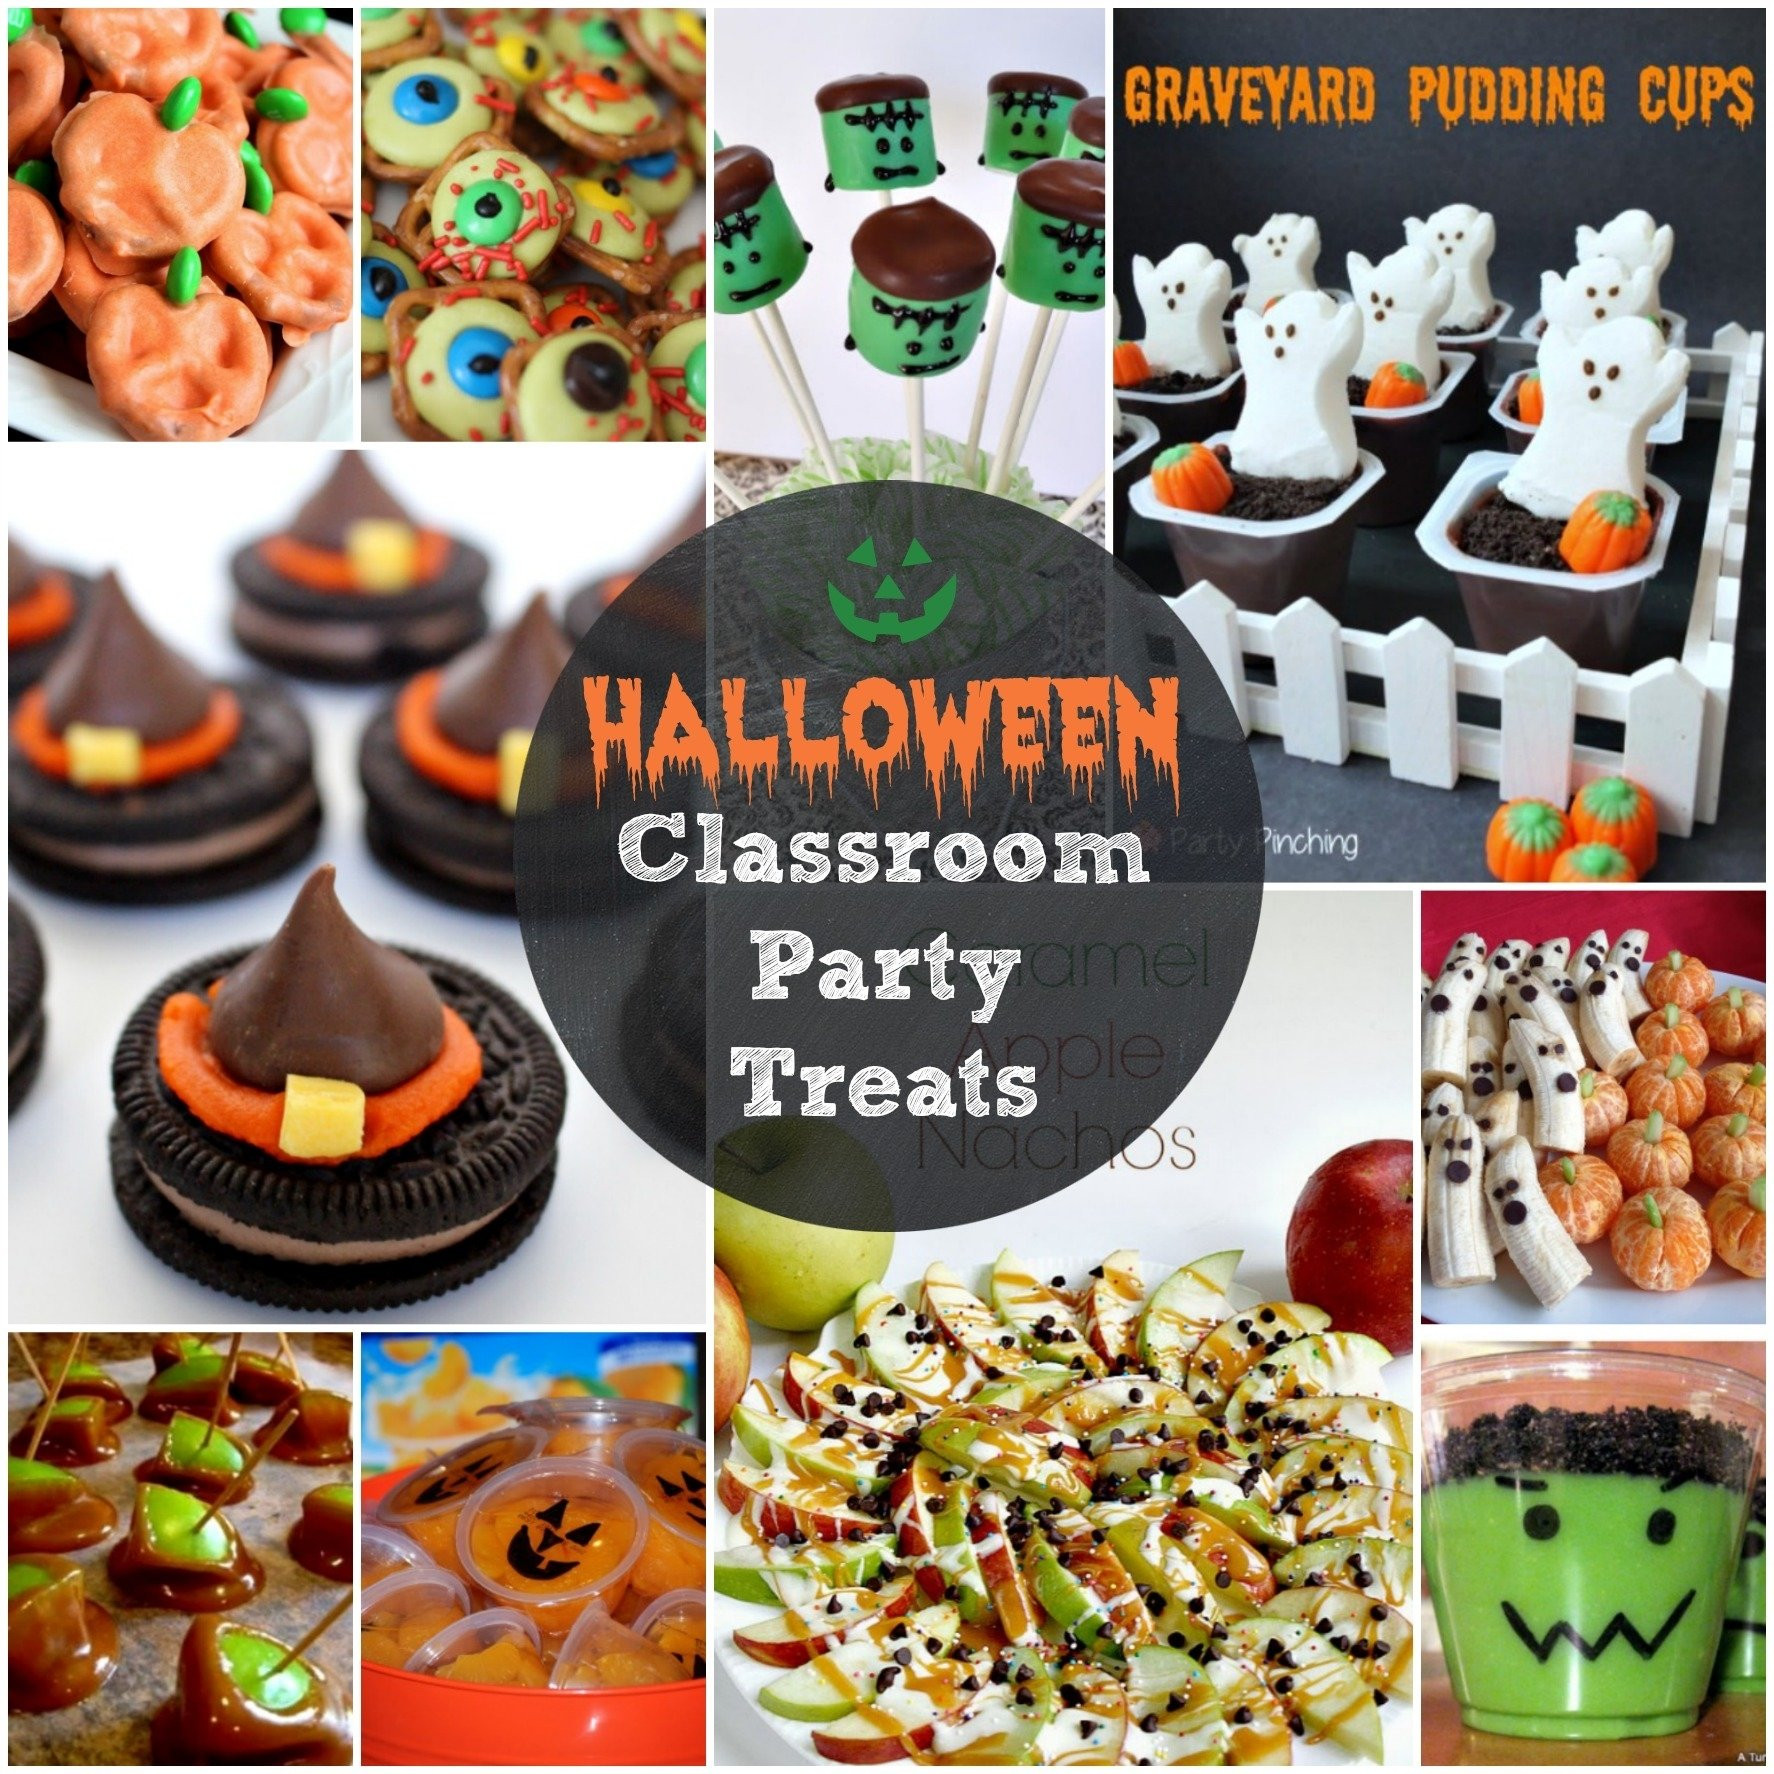 Halloween Treat Ideas For School Party
 10 Unique Halloween Treat Ideas For School Parties 2019